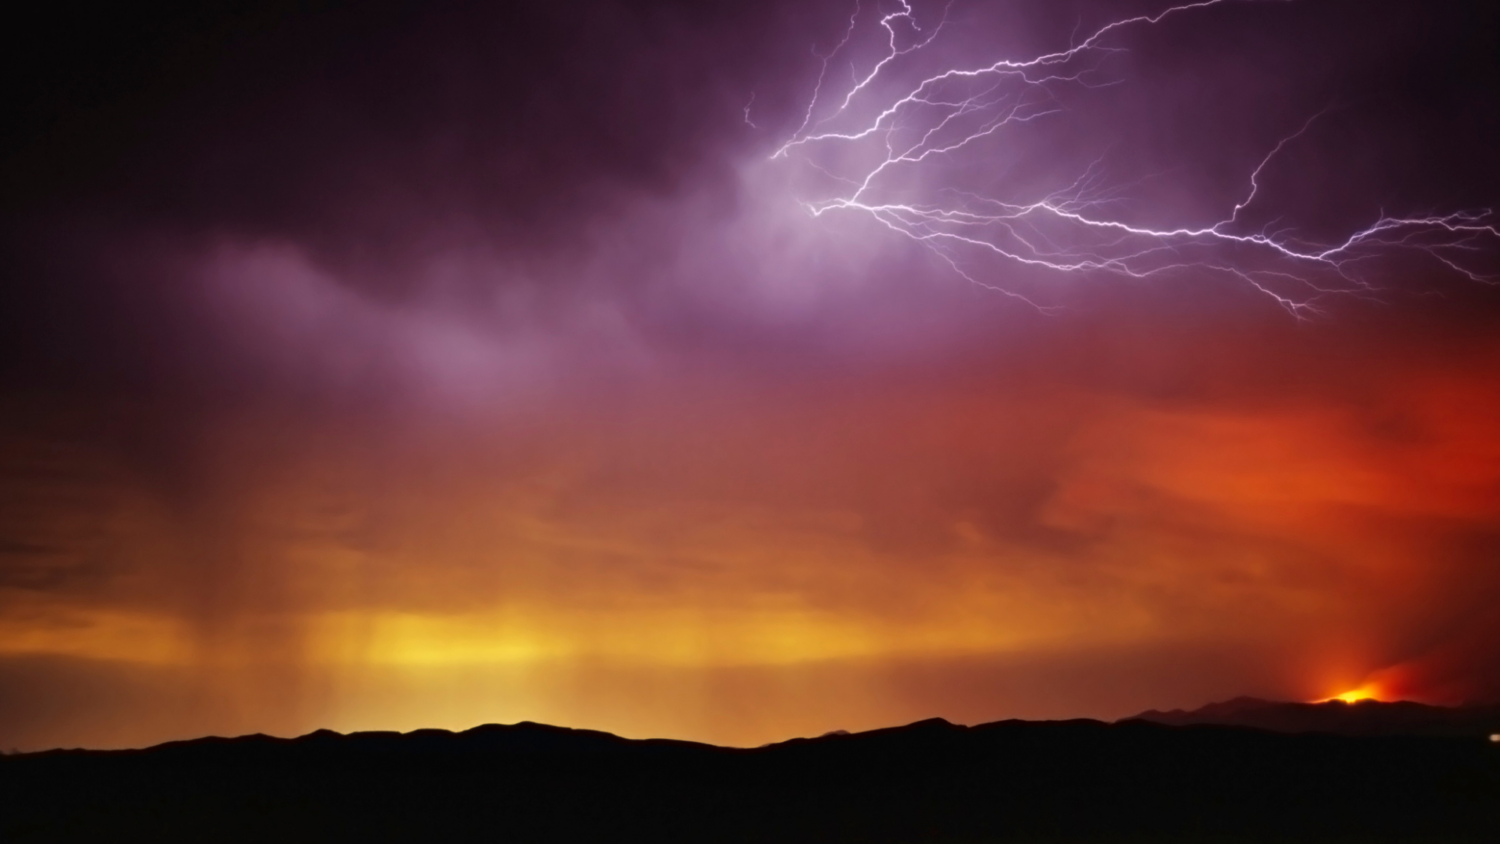 Lightning flashes through purple clouds over the horizon glowing orange.